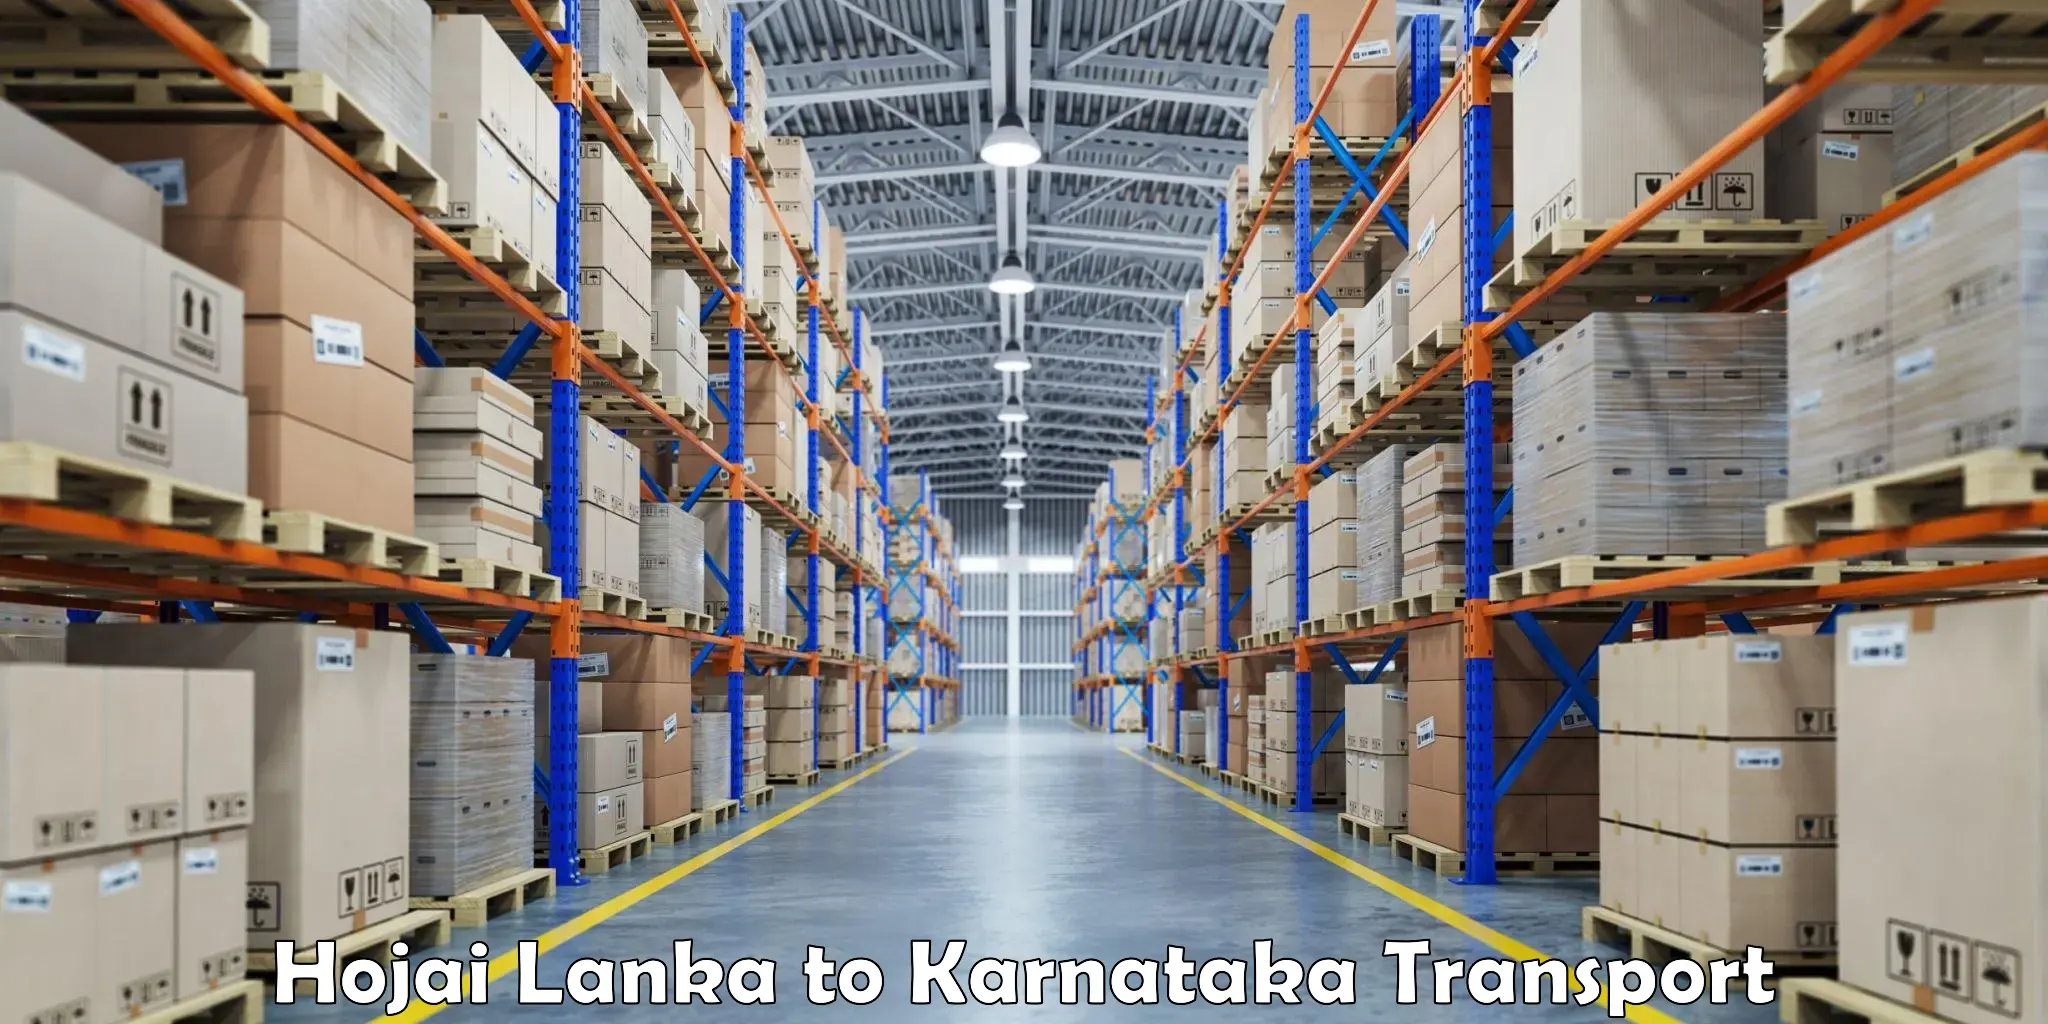 Truck transport companies in India Hojai Lanka to Uttara Kannada